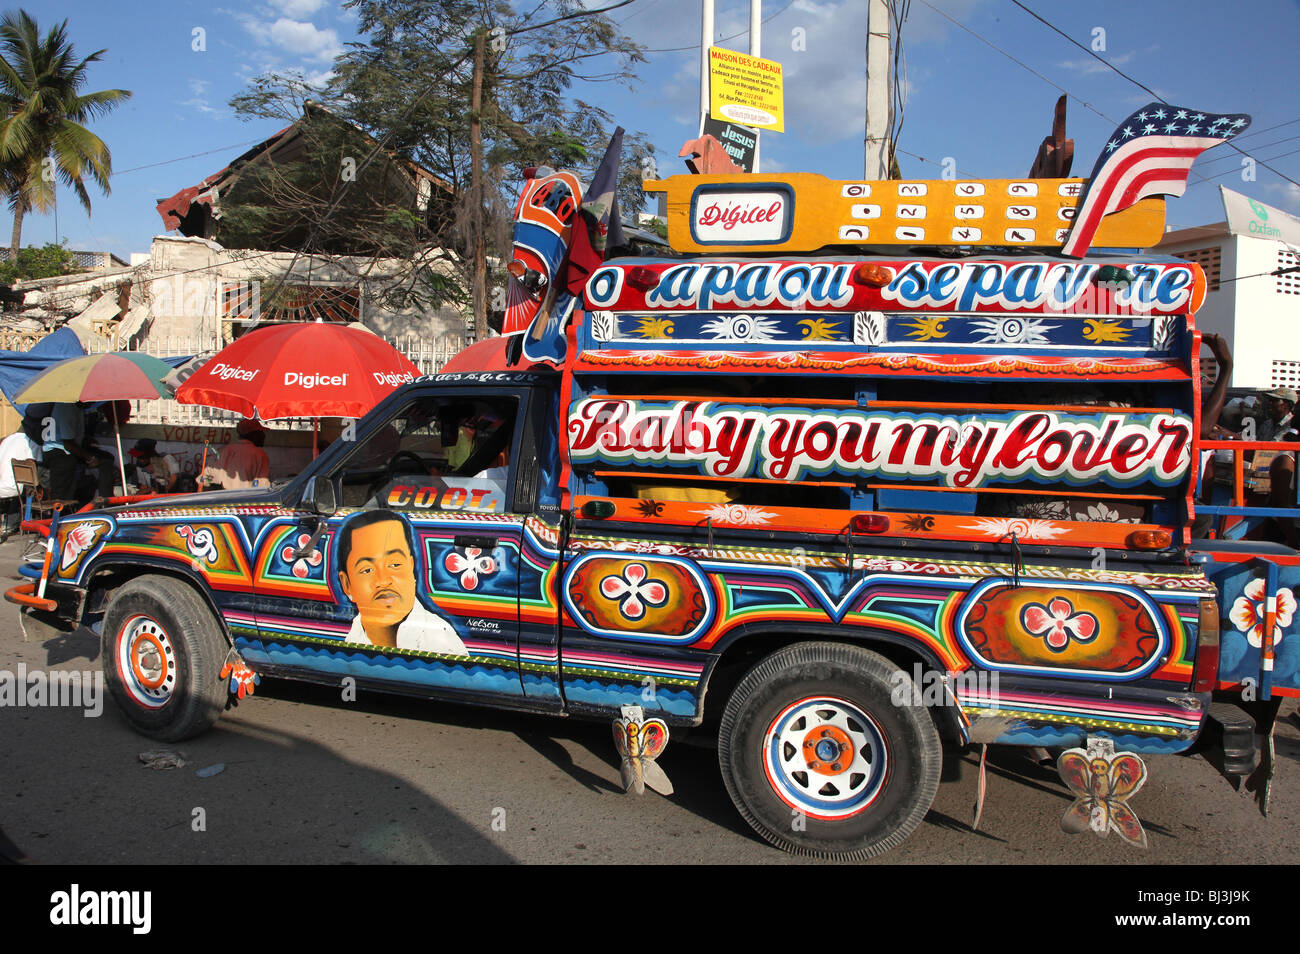 Tippen Sie auf tippen Sie Taxi, Port au Prince, Haiti Stockfoto